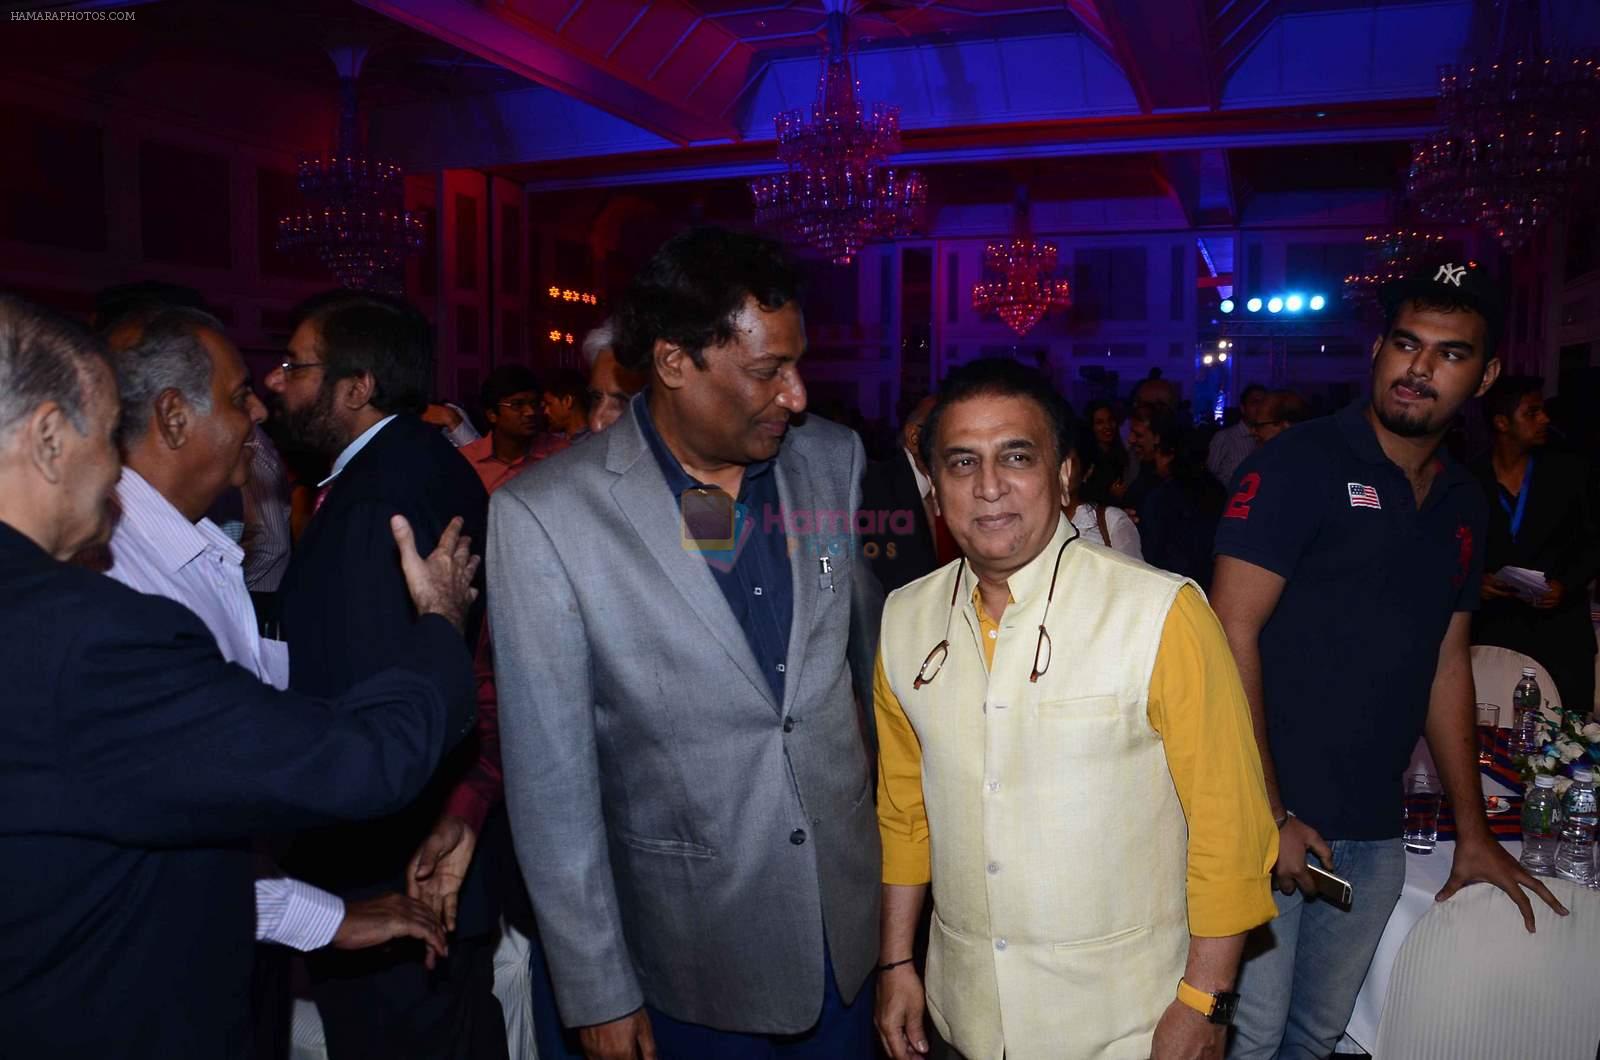 Sunil Gavaskar at Ceat Cricket Awards in Trident, Mumbai on 25th May 2015